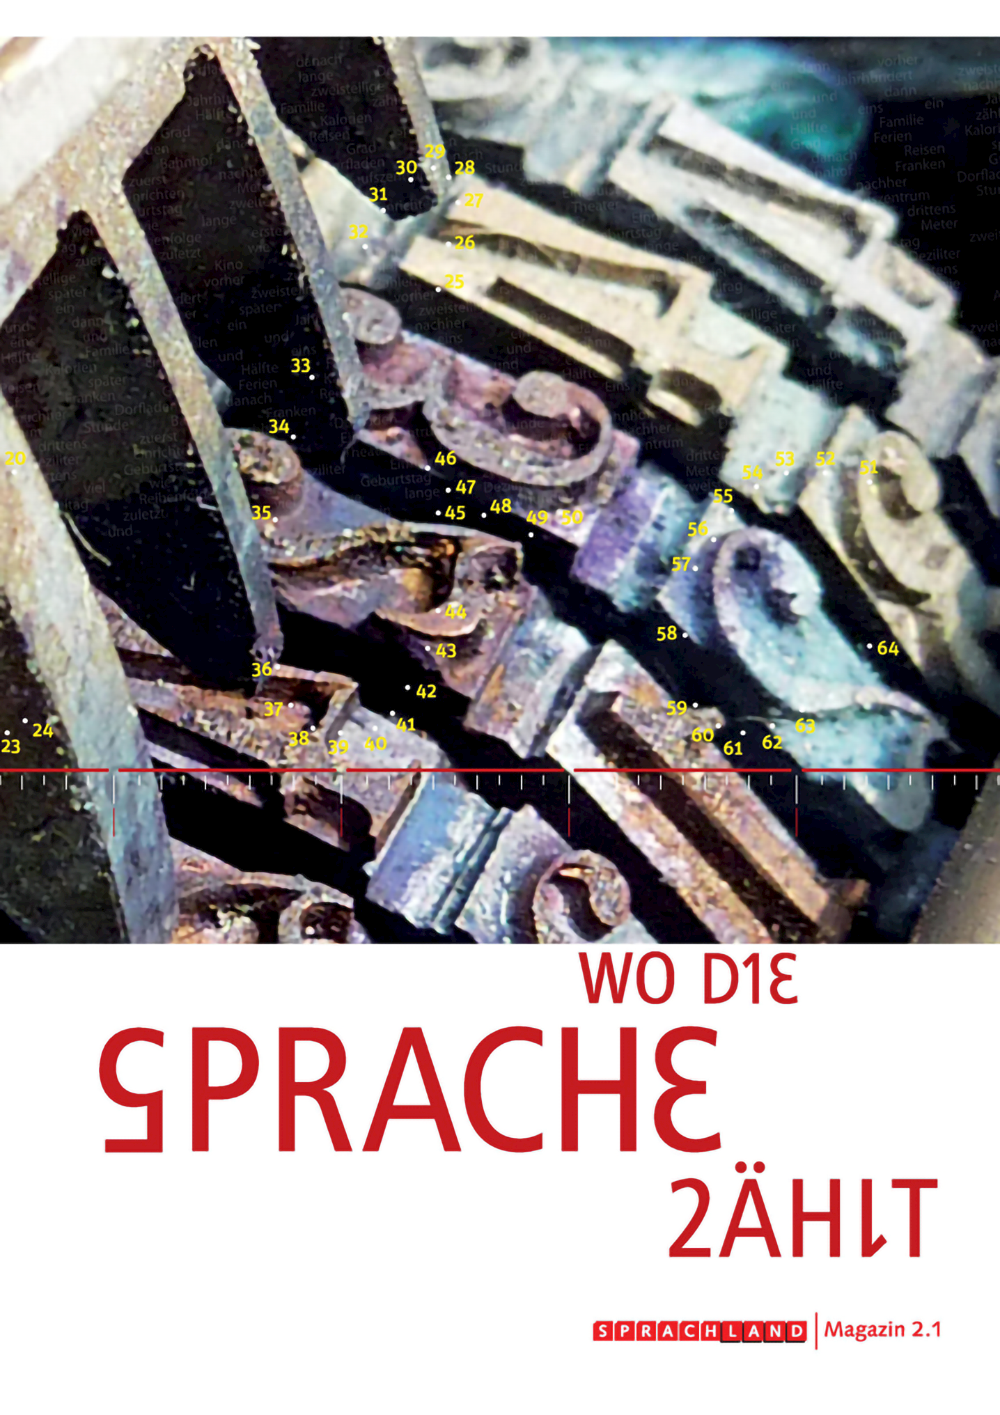 Sprachland Magazine 2